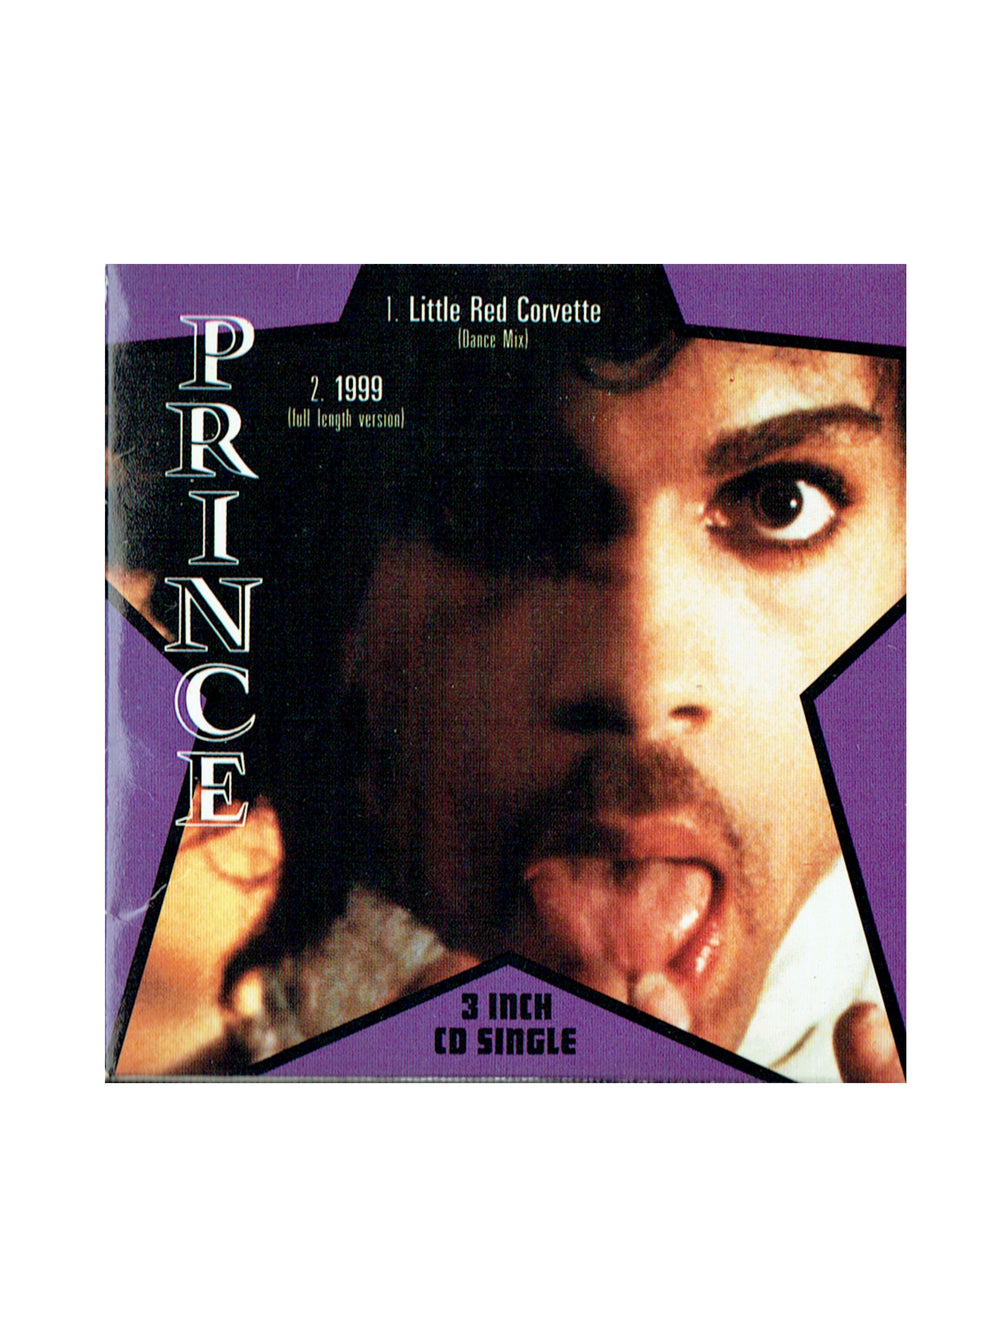 Prince Little Red Corvette Dance Mix 3 Inch UK CD Single 1989 Original SMS